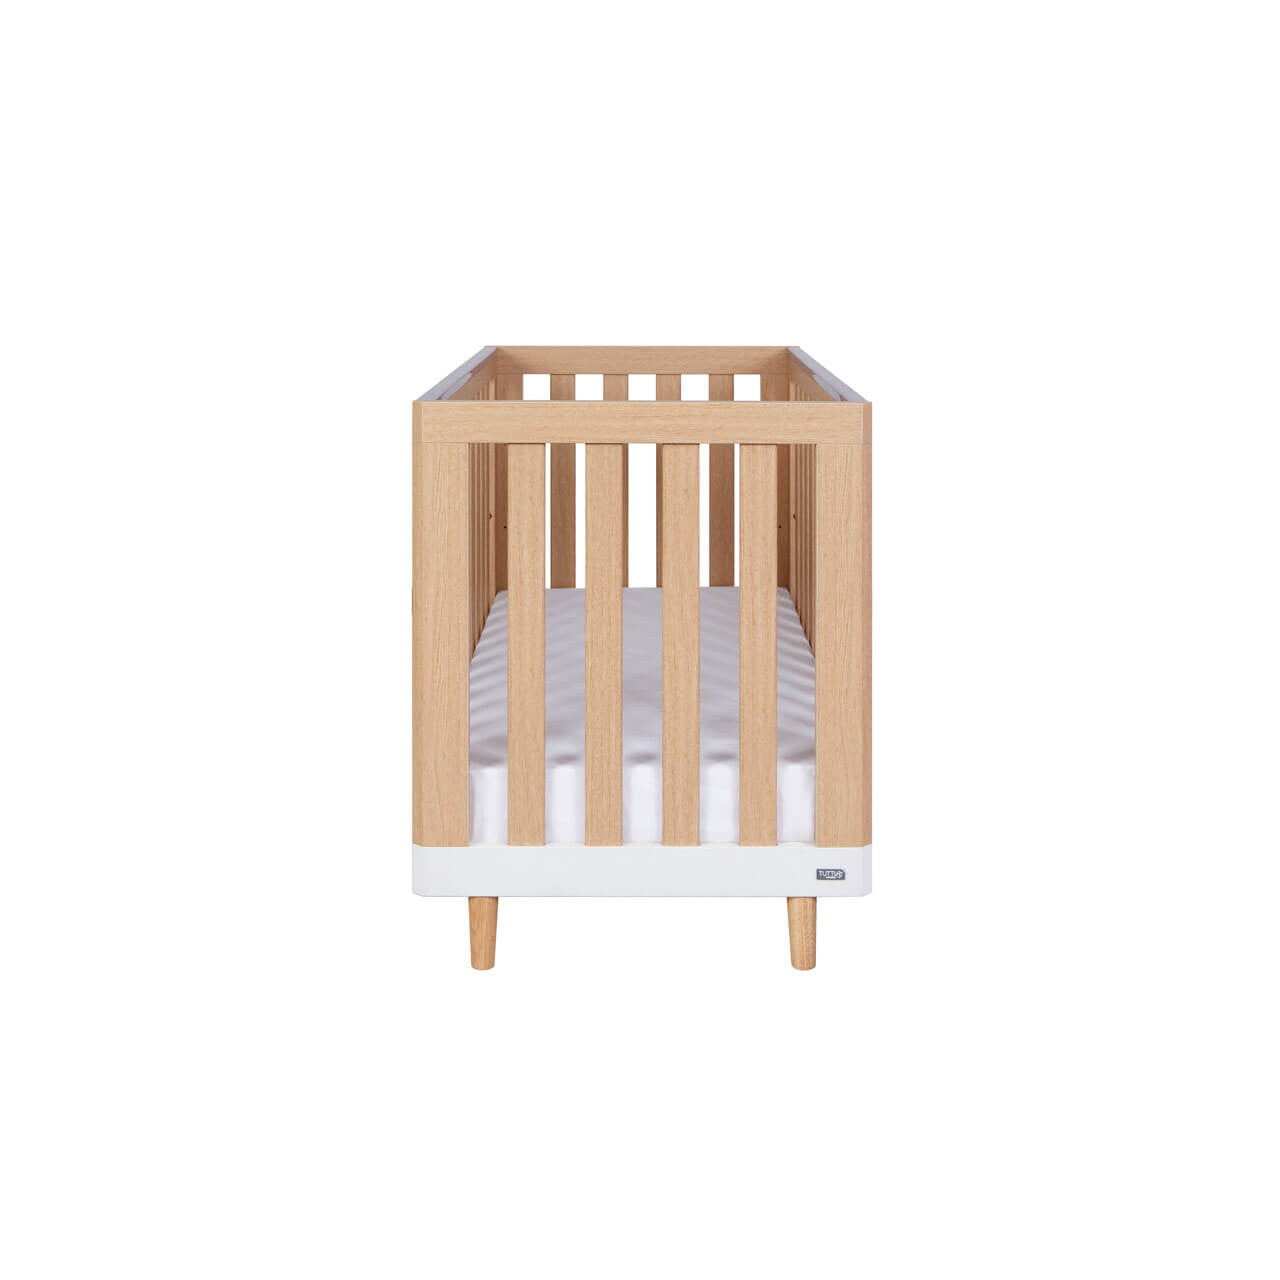 Tutti Bambini Hygge Mini Cot Bed - White/Light Oak -  | For Your Little One